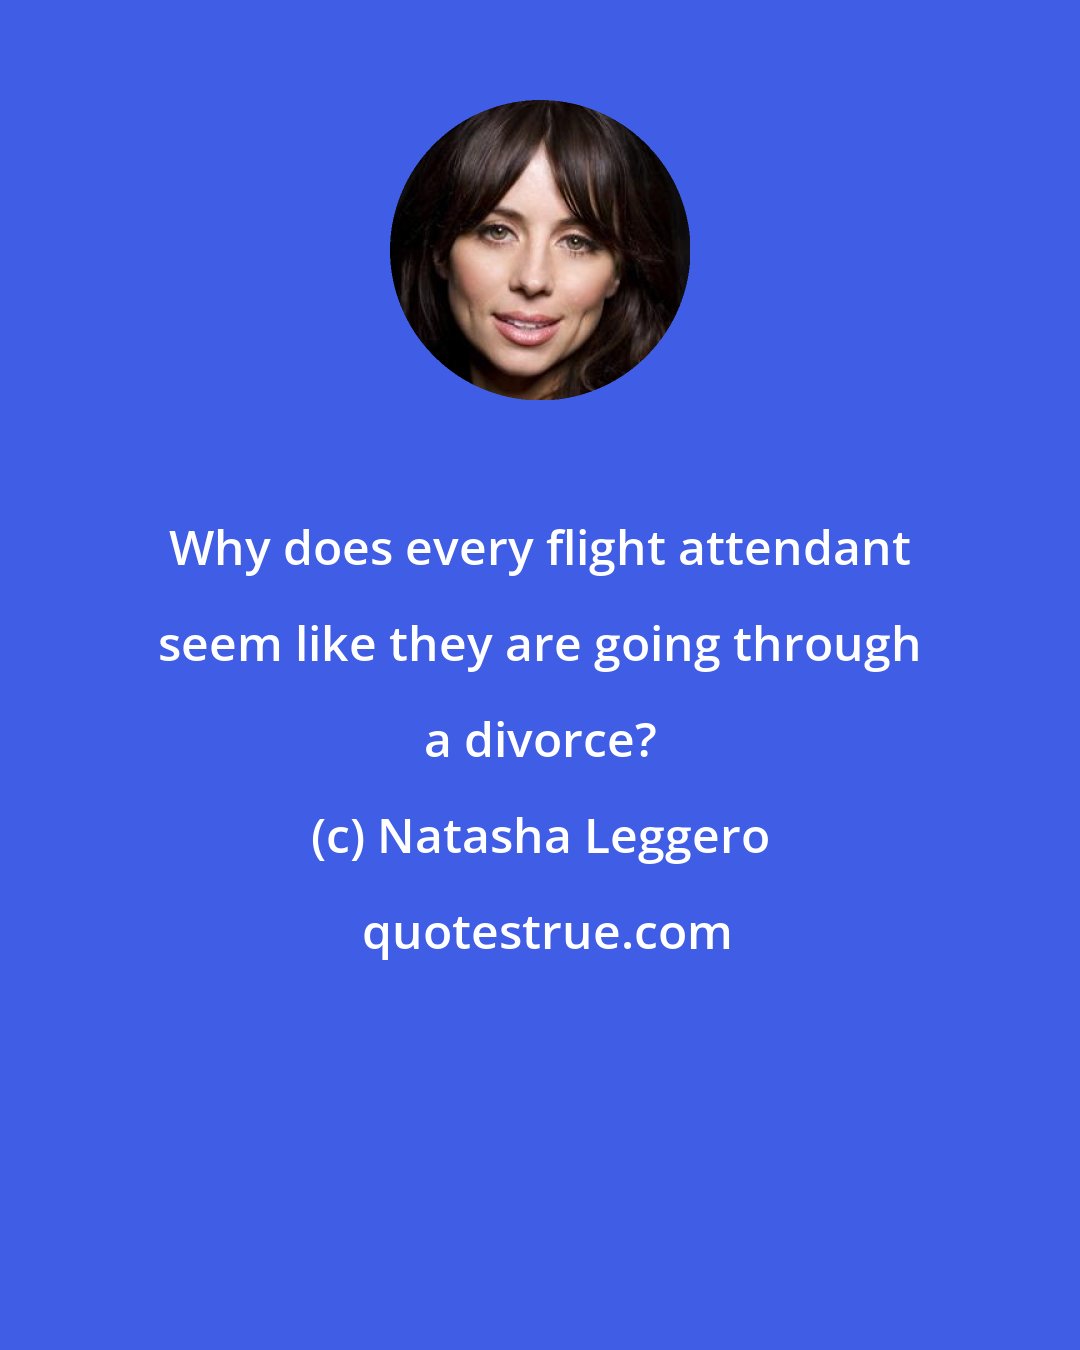 Natasha Leggero: Why does every flight attendant seem like they are going through a divorce?